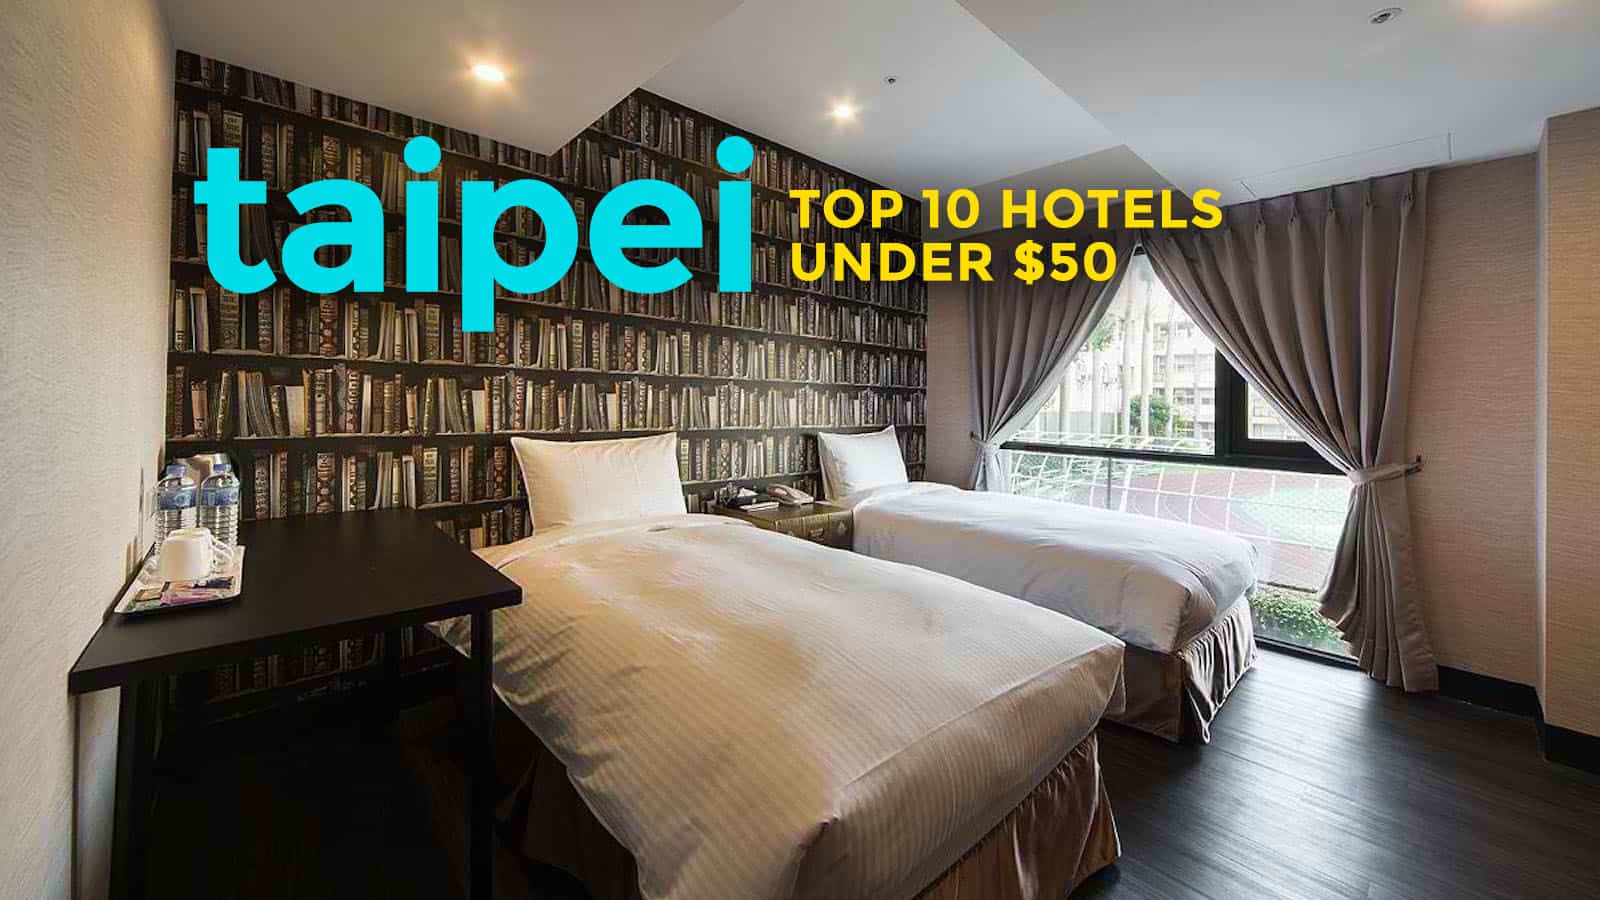 TAIPEI: Top 10 Hotels Under $50